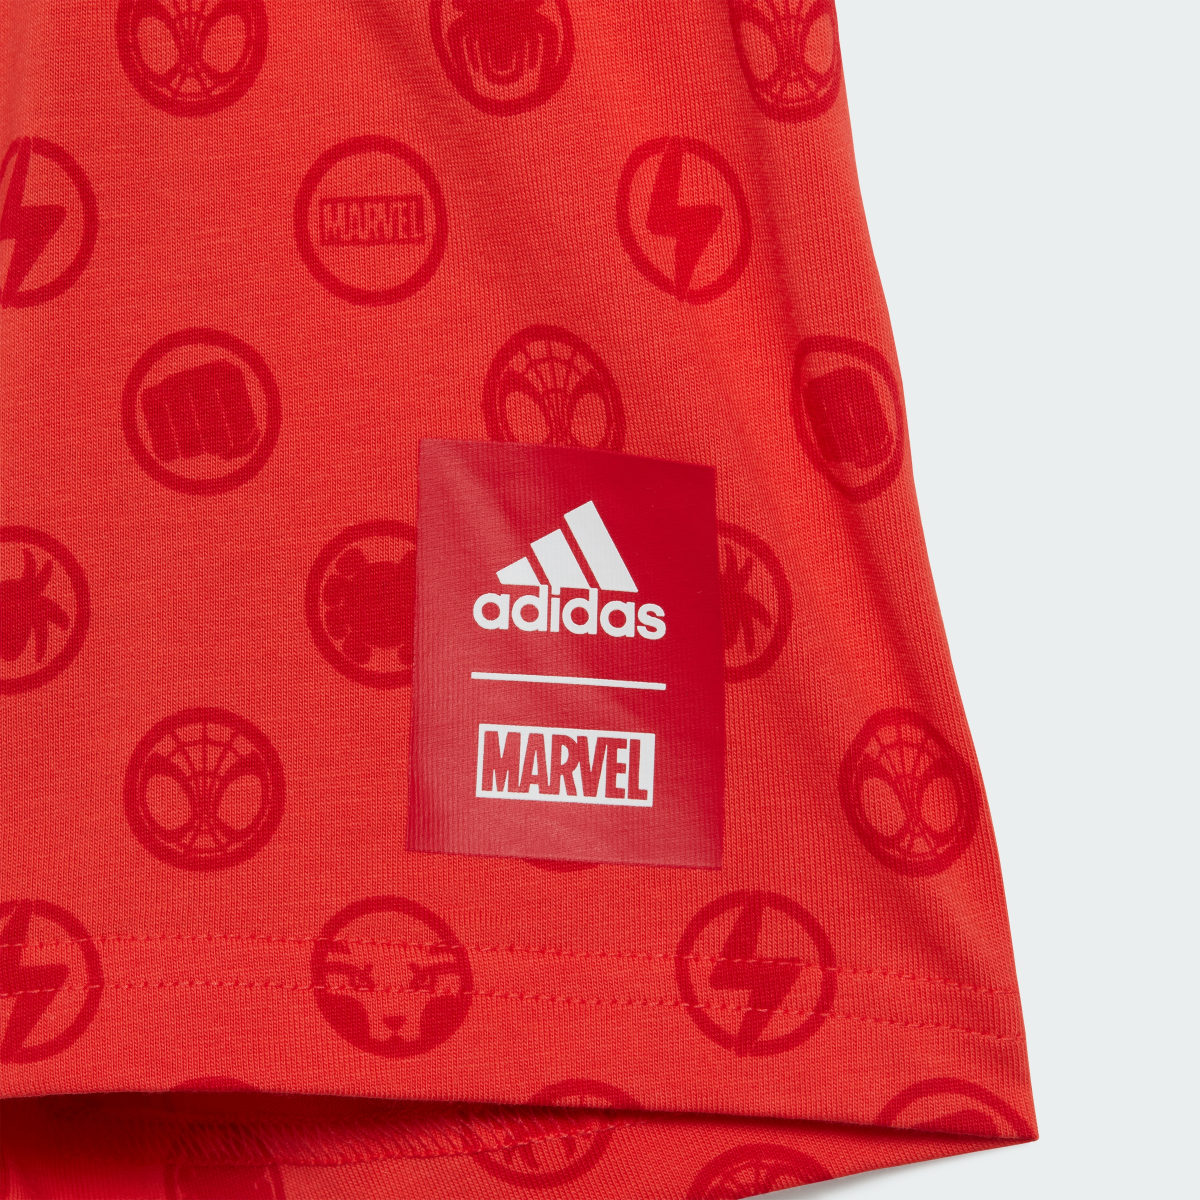 Adidas x Marvel Spider-Man Tişört ve Şort Takımı. 9